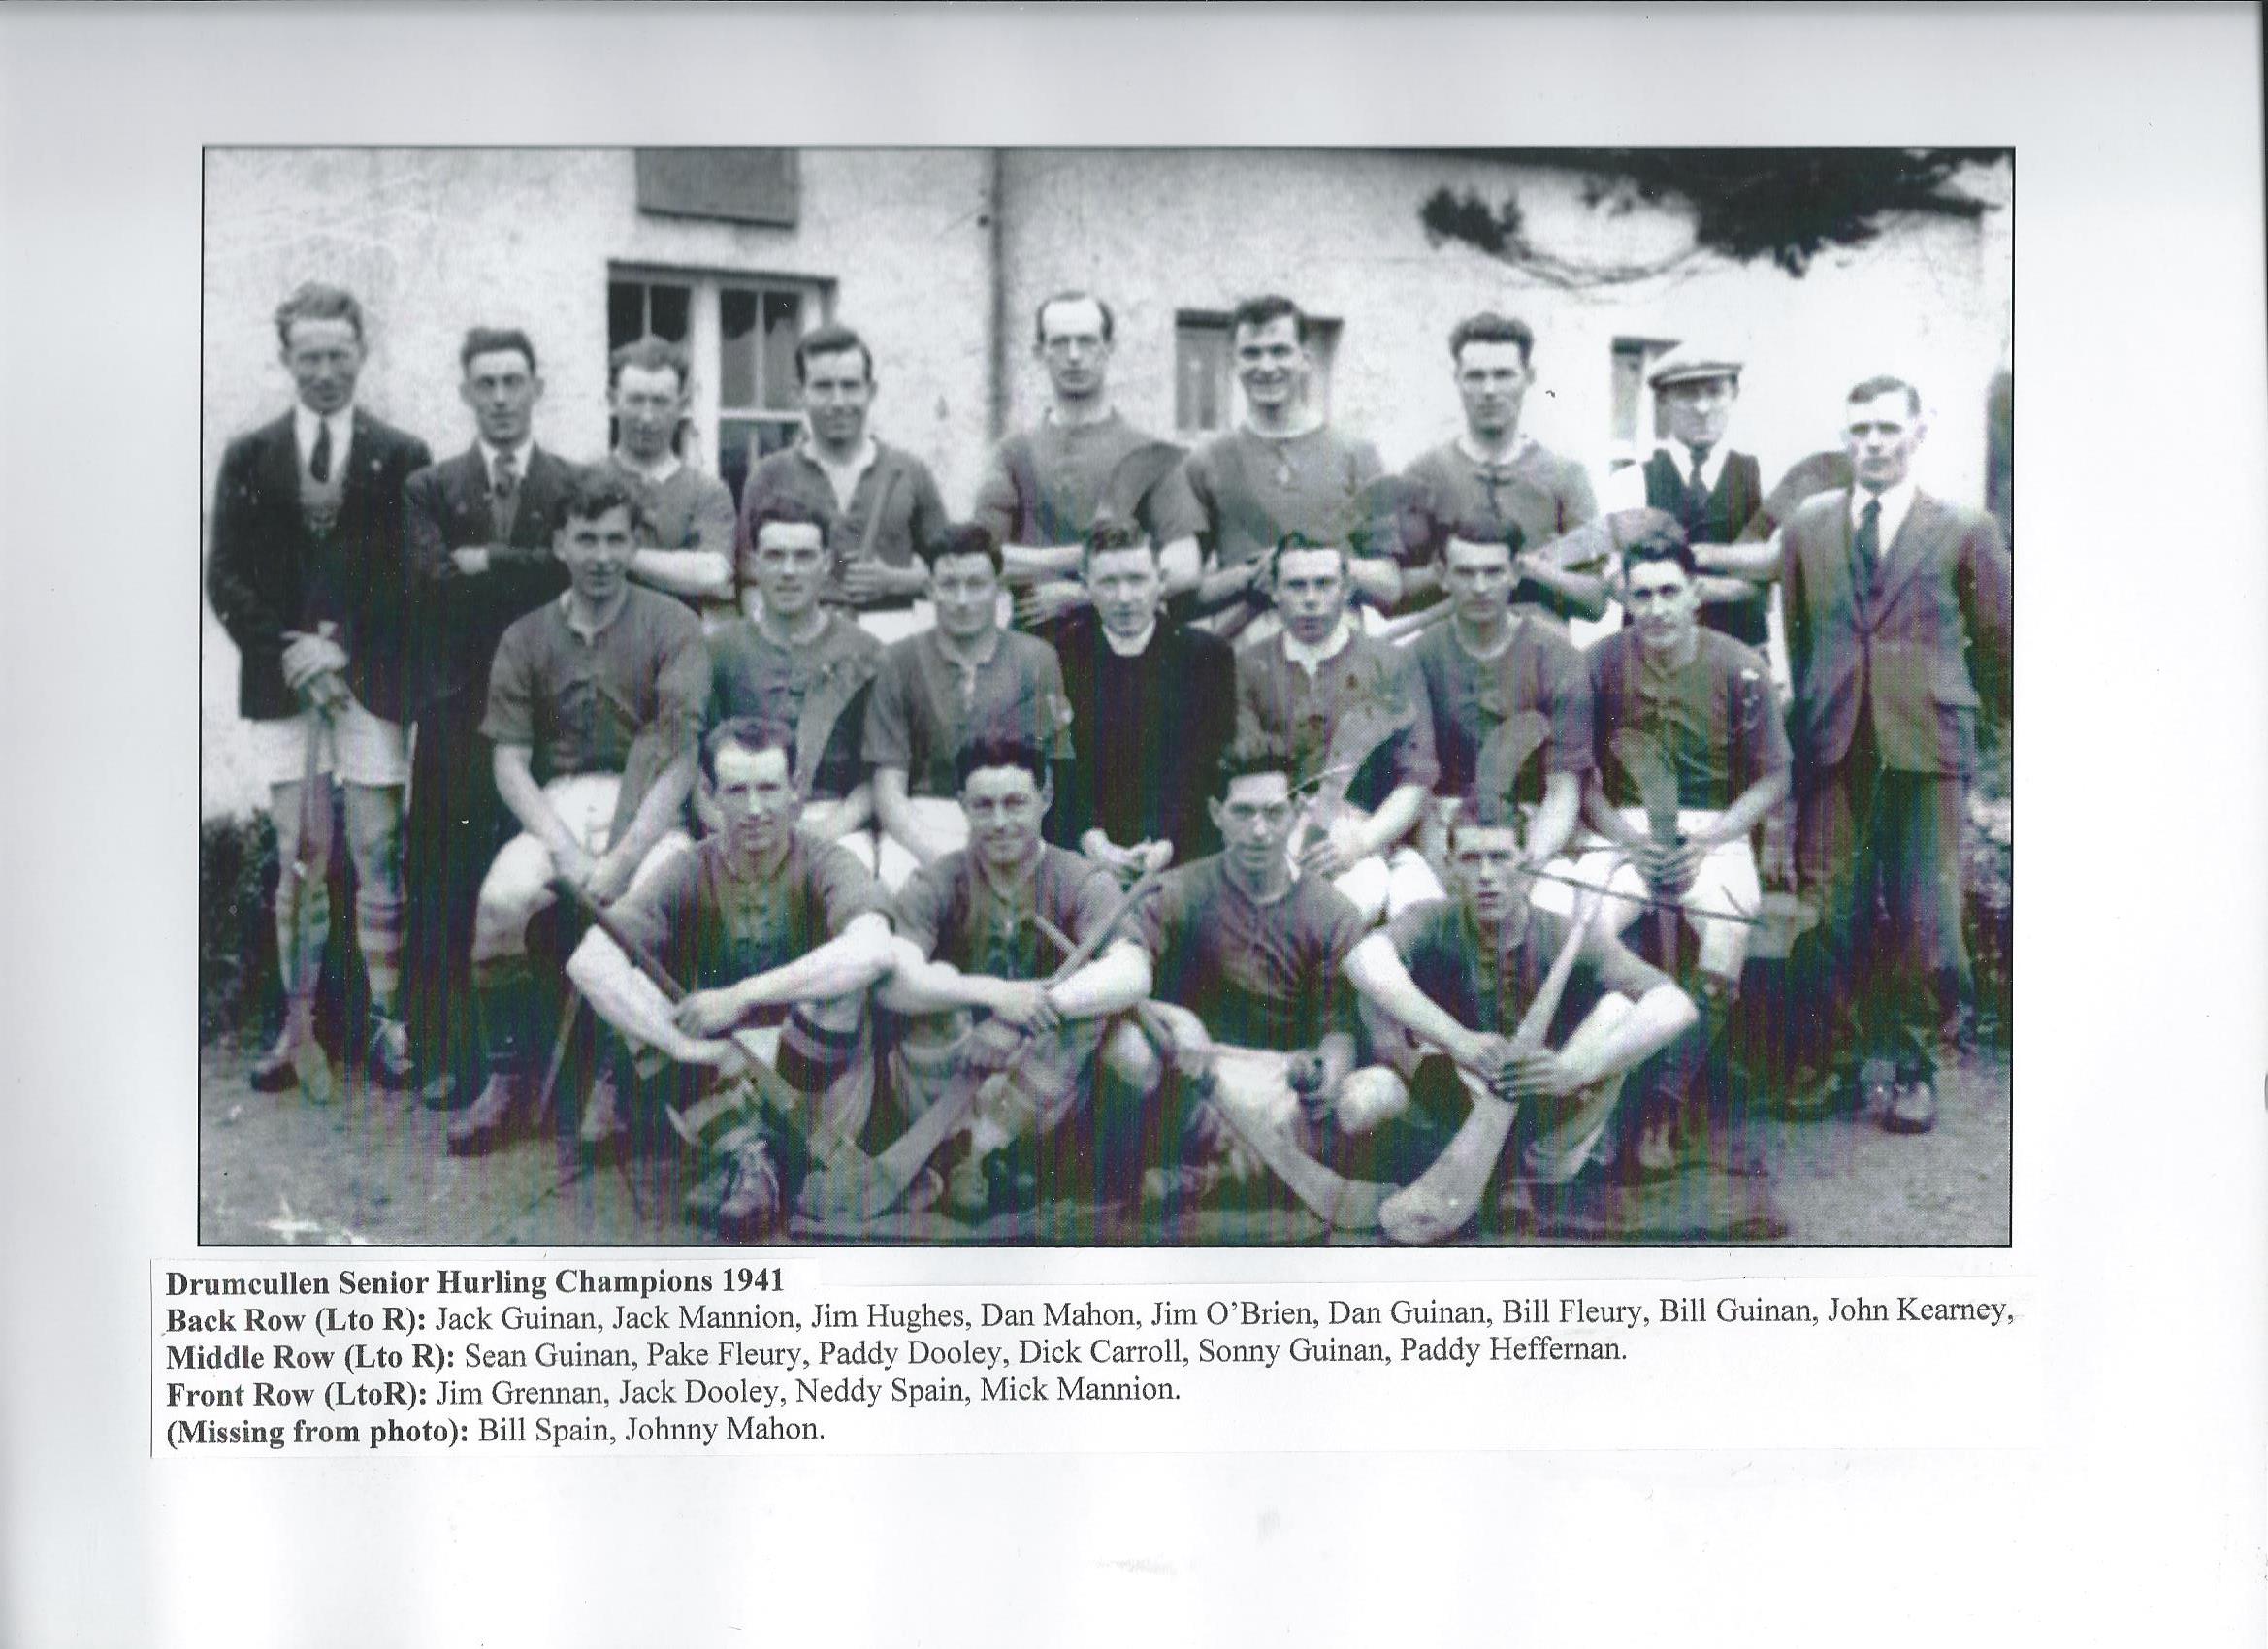 Drumcullen Senior Team - 1941